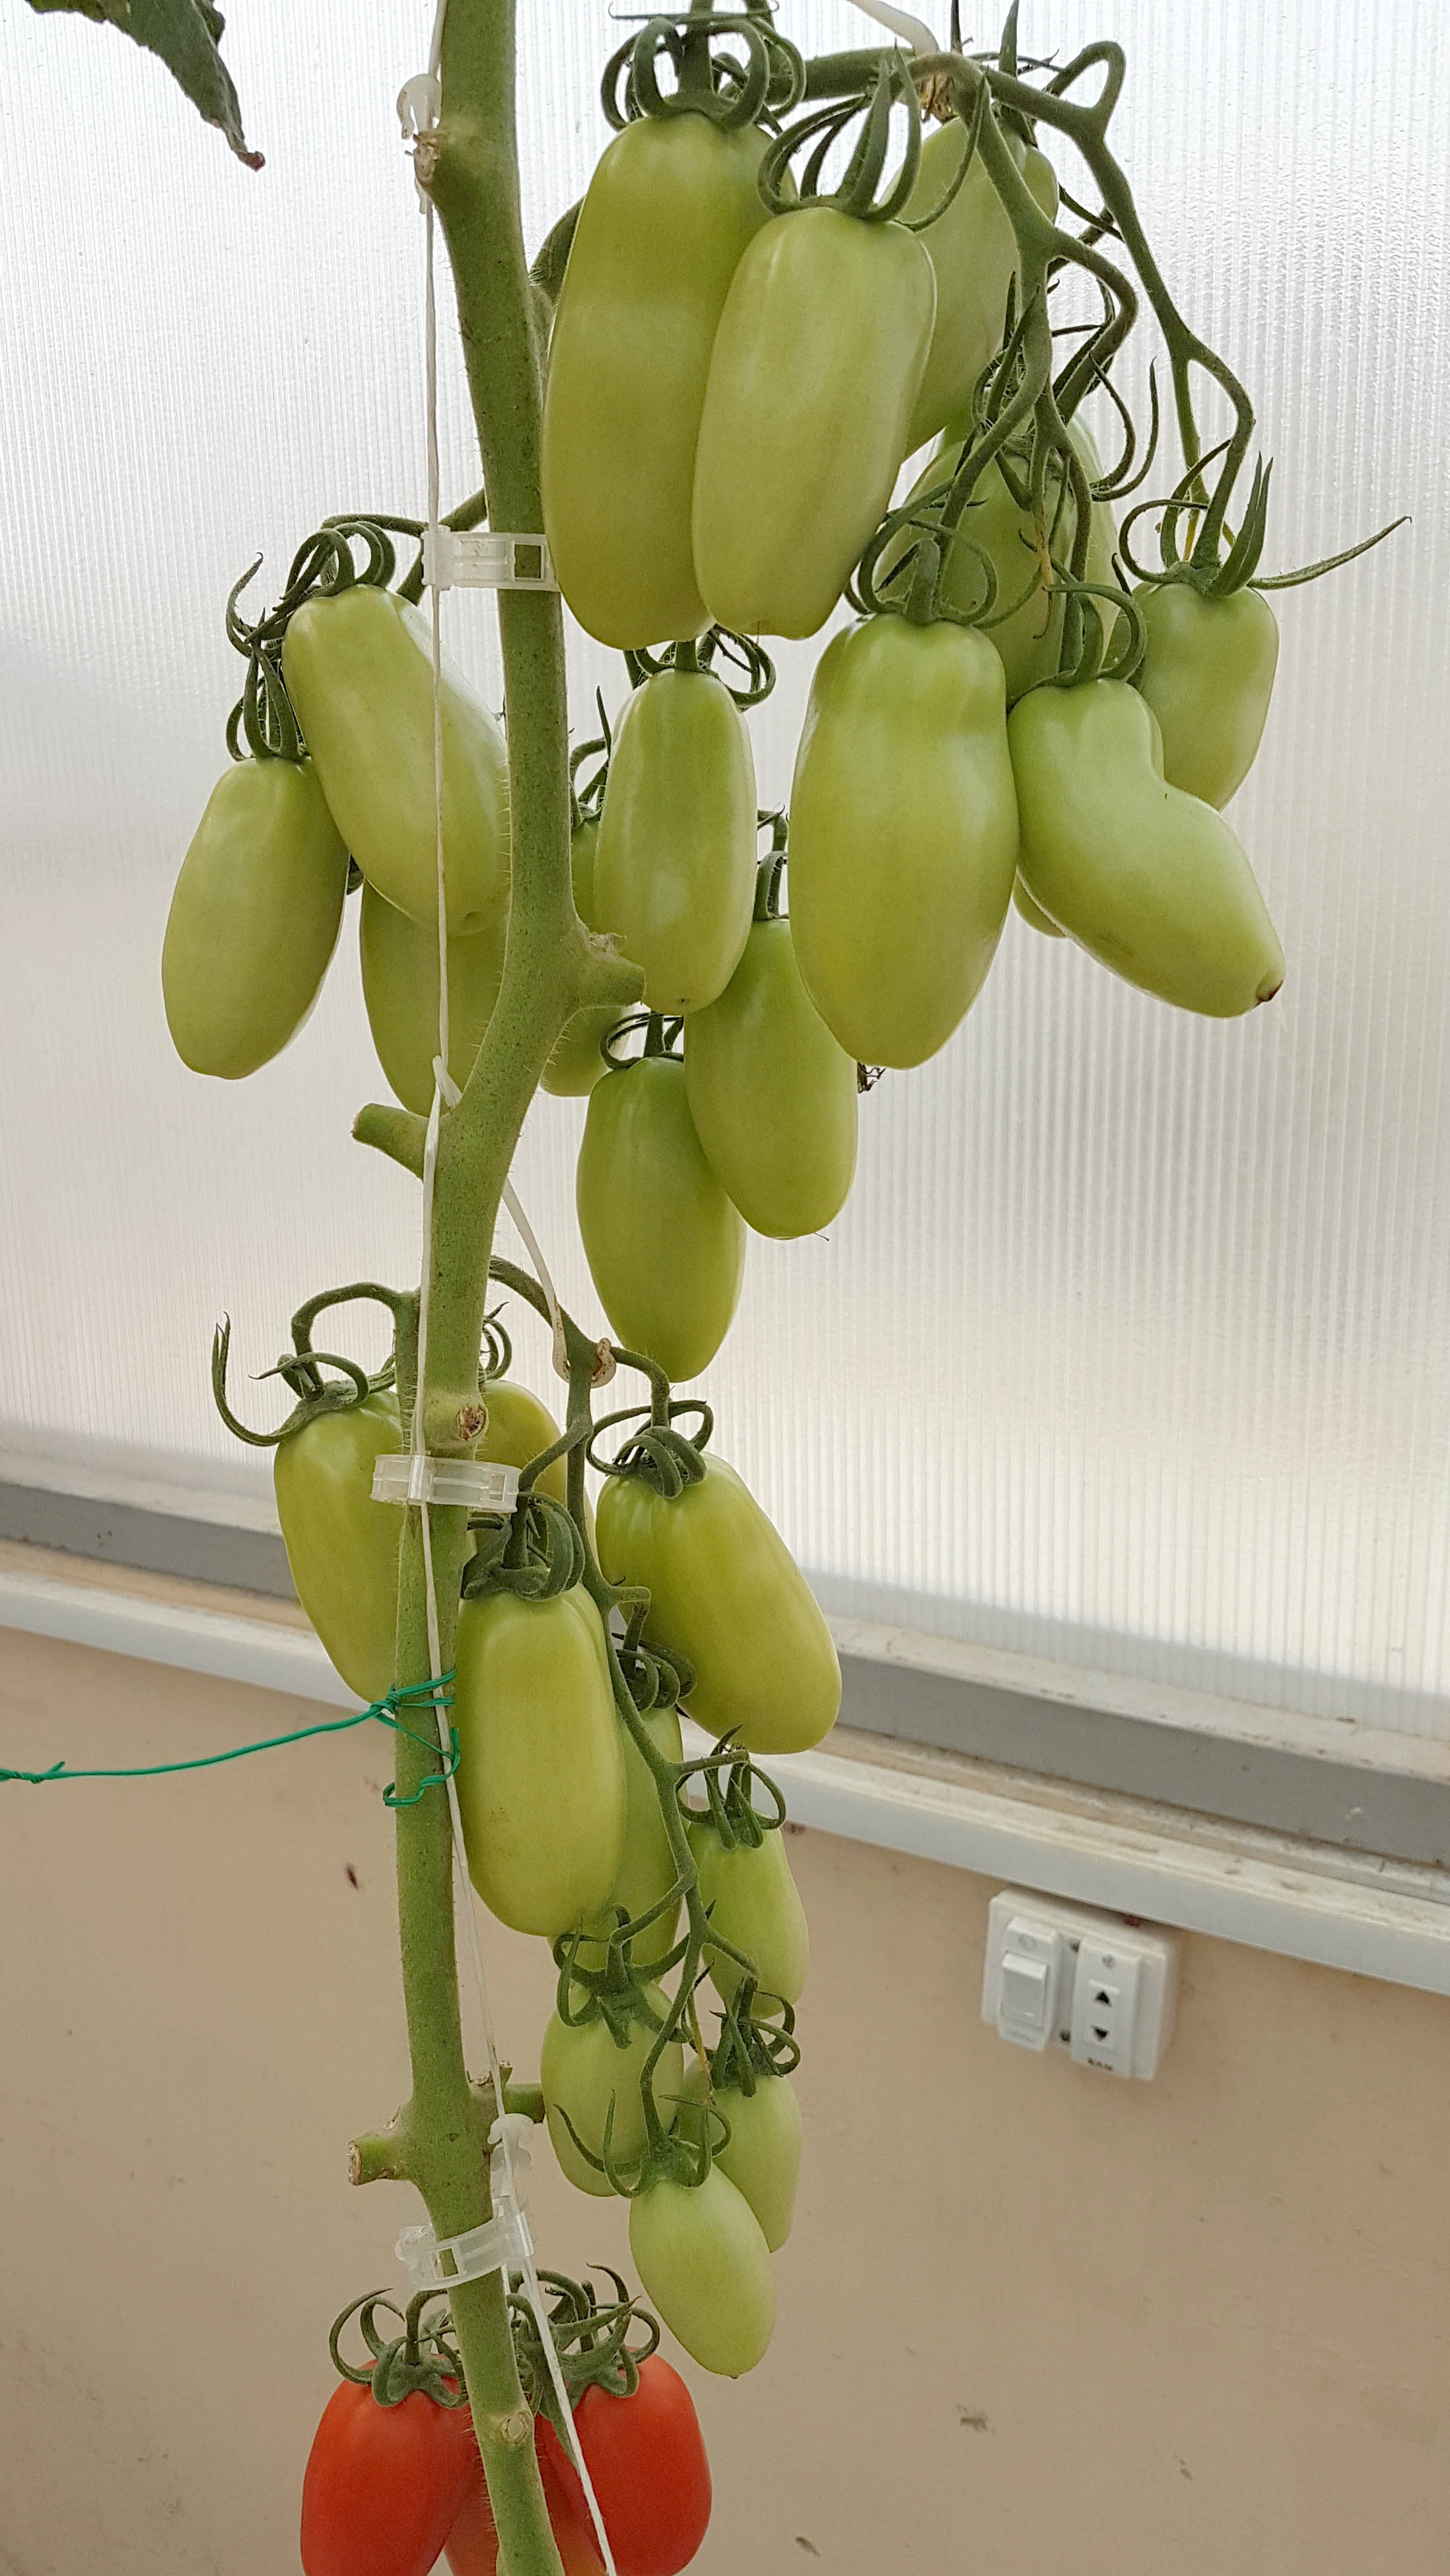 Loads-of-Tomatoes-in-Hydroponic-Dutch-Bucket-System-growing-ar-Pakistan-Hydroponics-Climate-Controlled-Greenhouse-Karachi-Pakistan